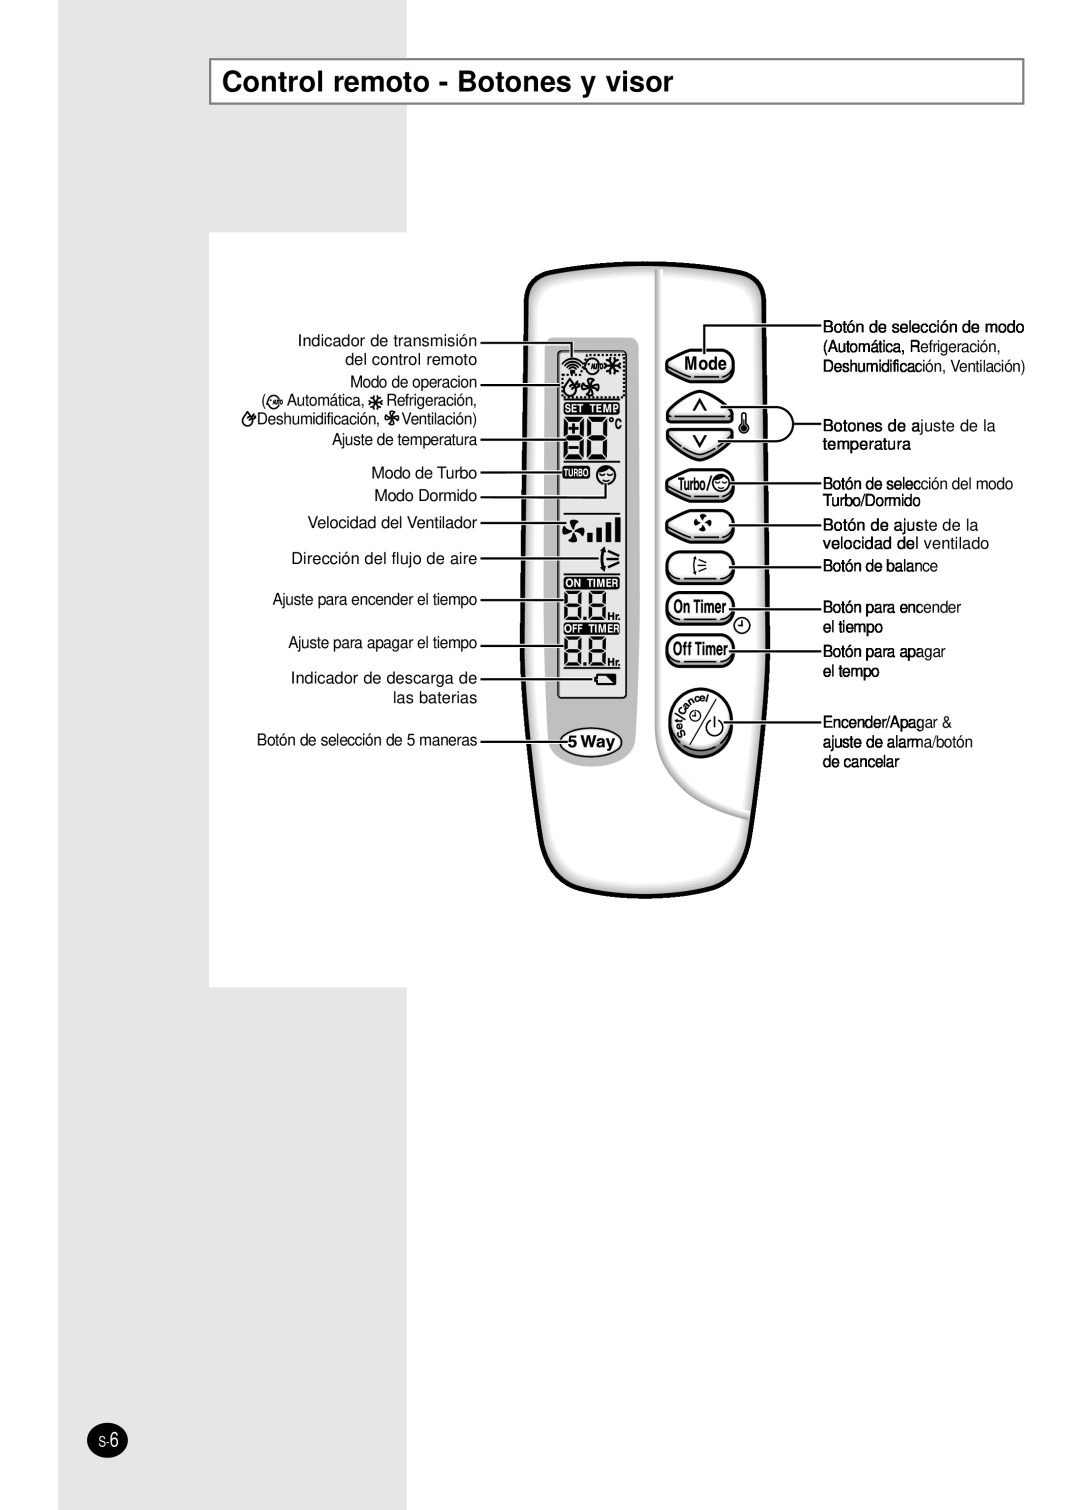 Samsung AM14B1(B2)E07 manuel dutilisation Control remoto - Botones y visor 